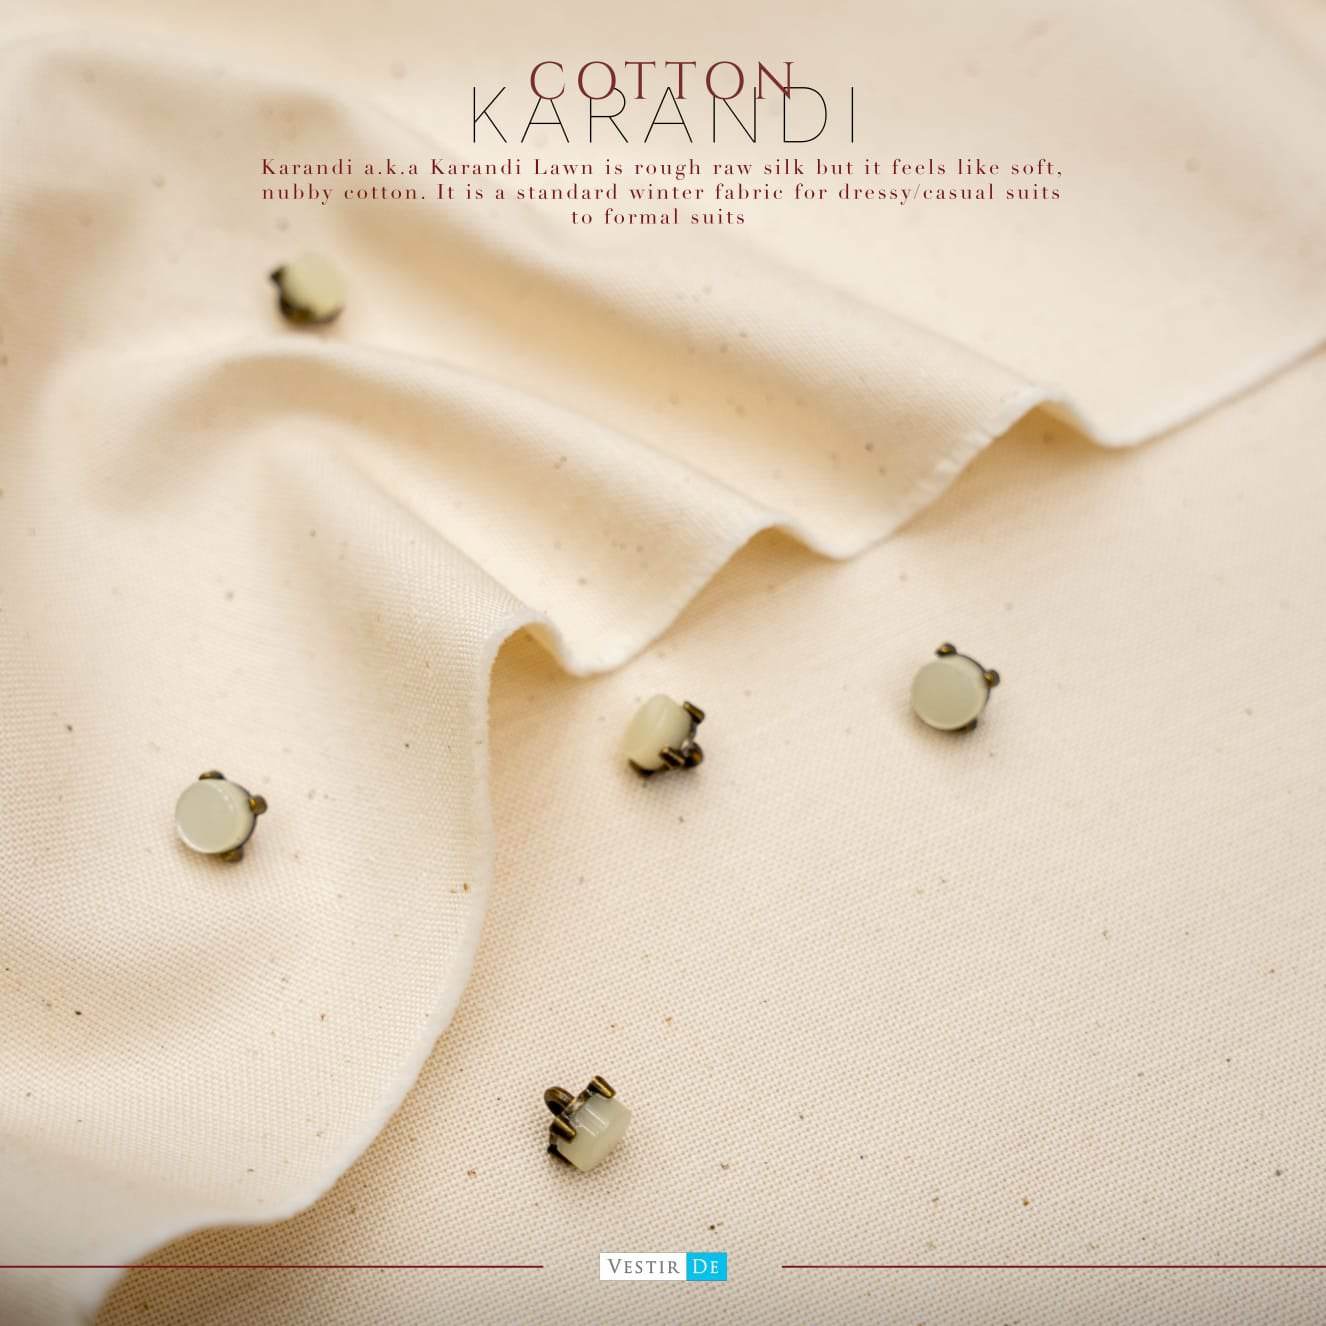 Cotton Karandi